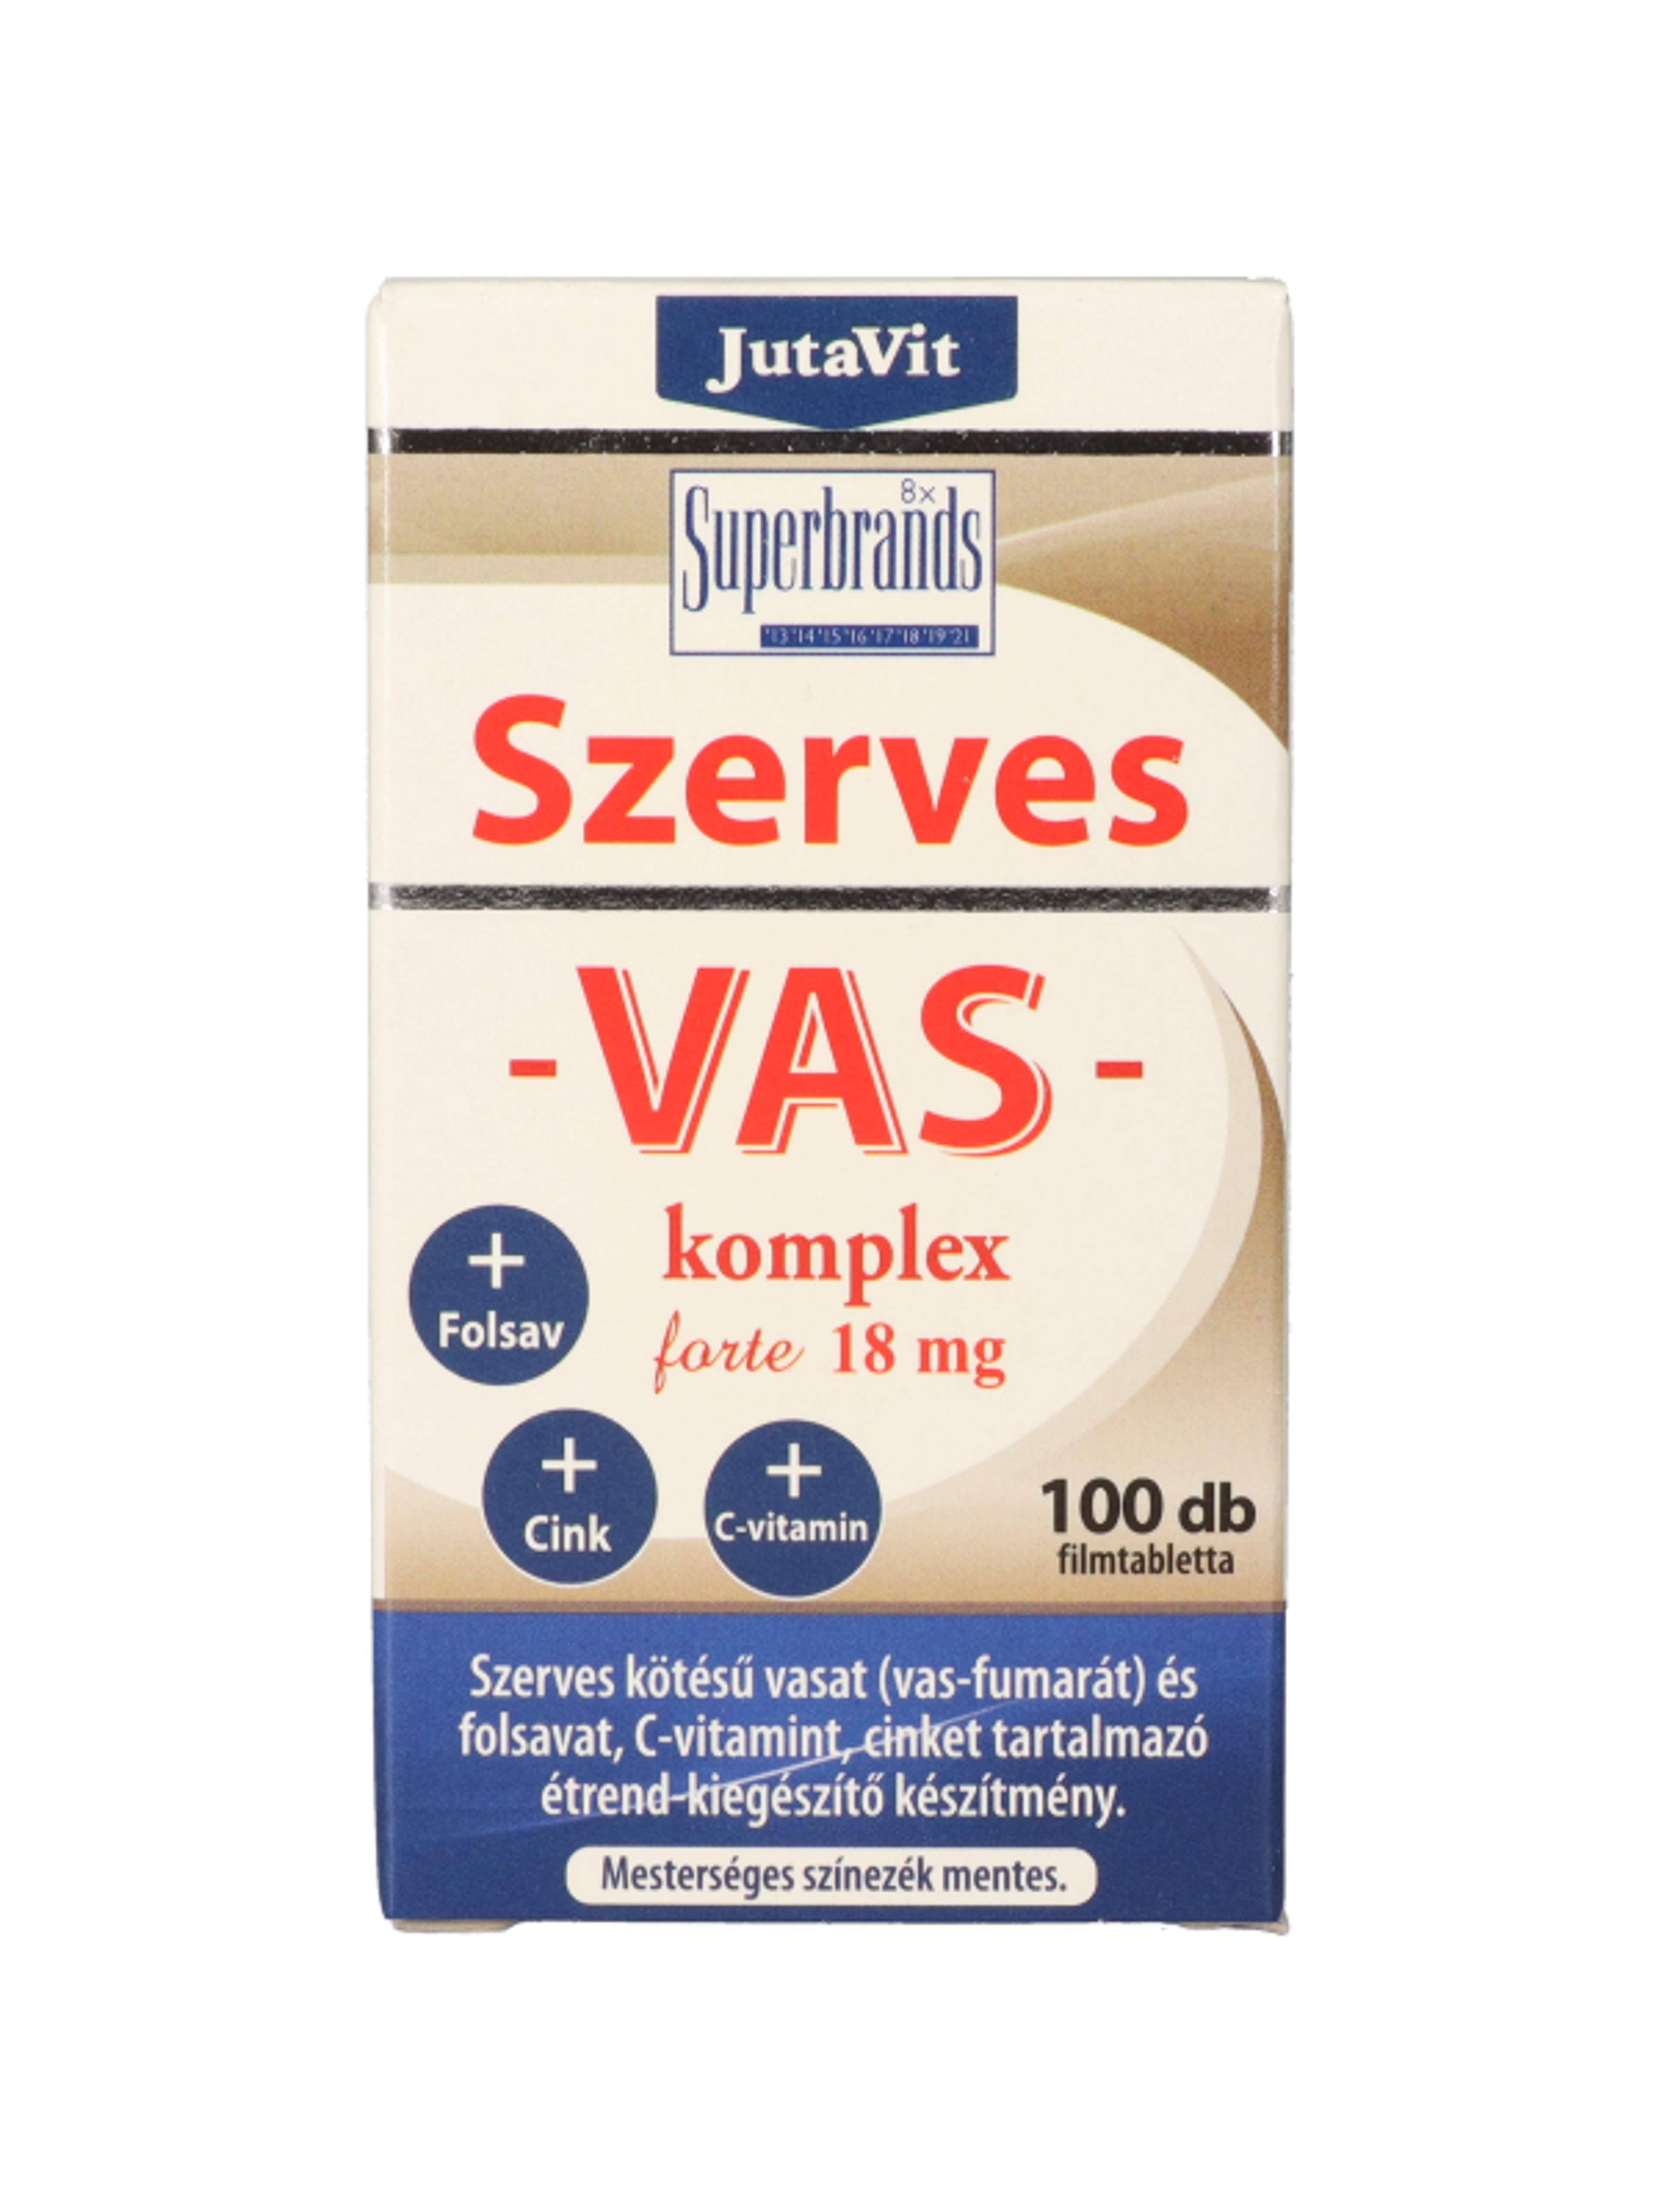 JutaVit Szerves Vas Komplex Forte 18 mg, étrend-kiegészítő filmtabletta - 100 db-1